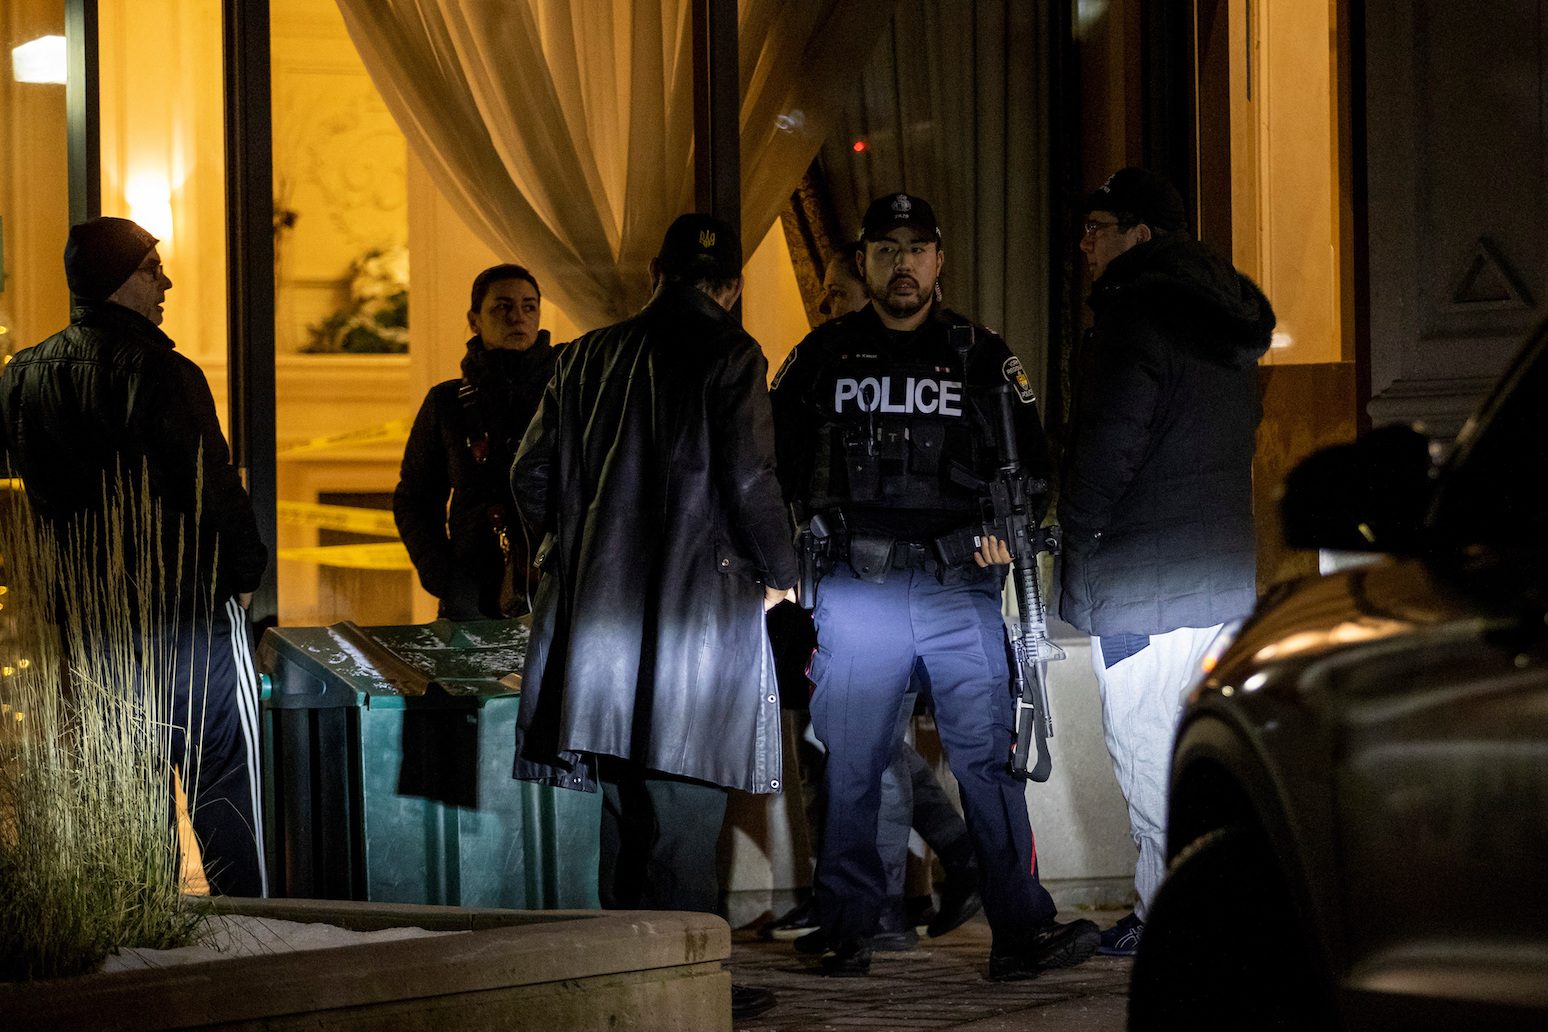 6 dead including suspect in shooting near Canada’s Toronto